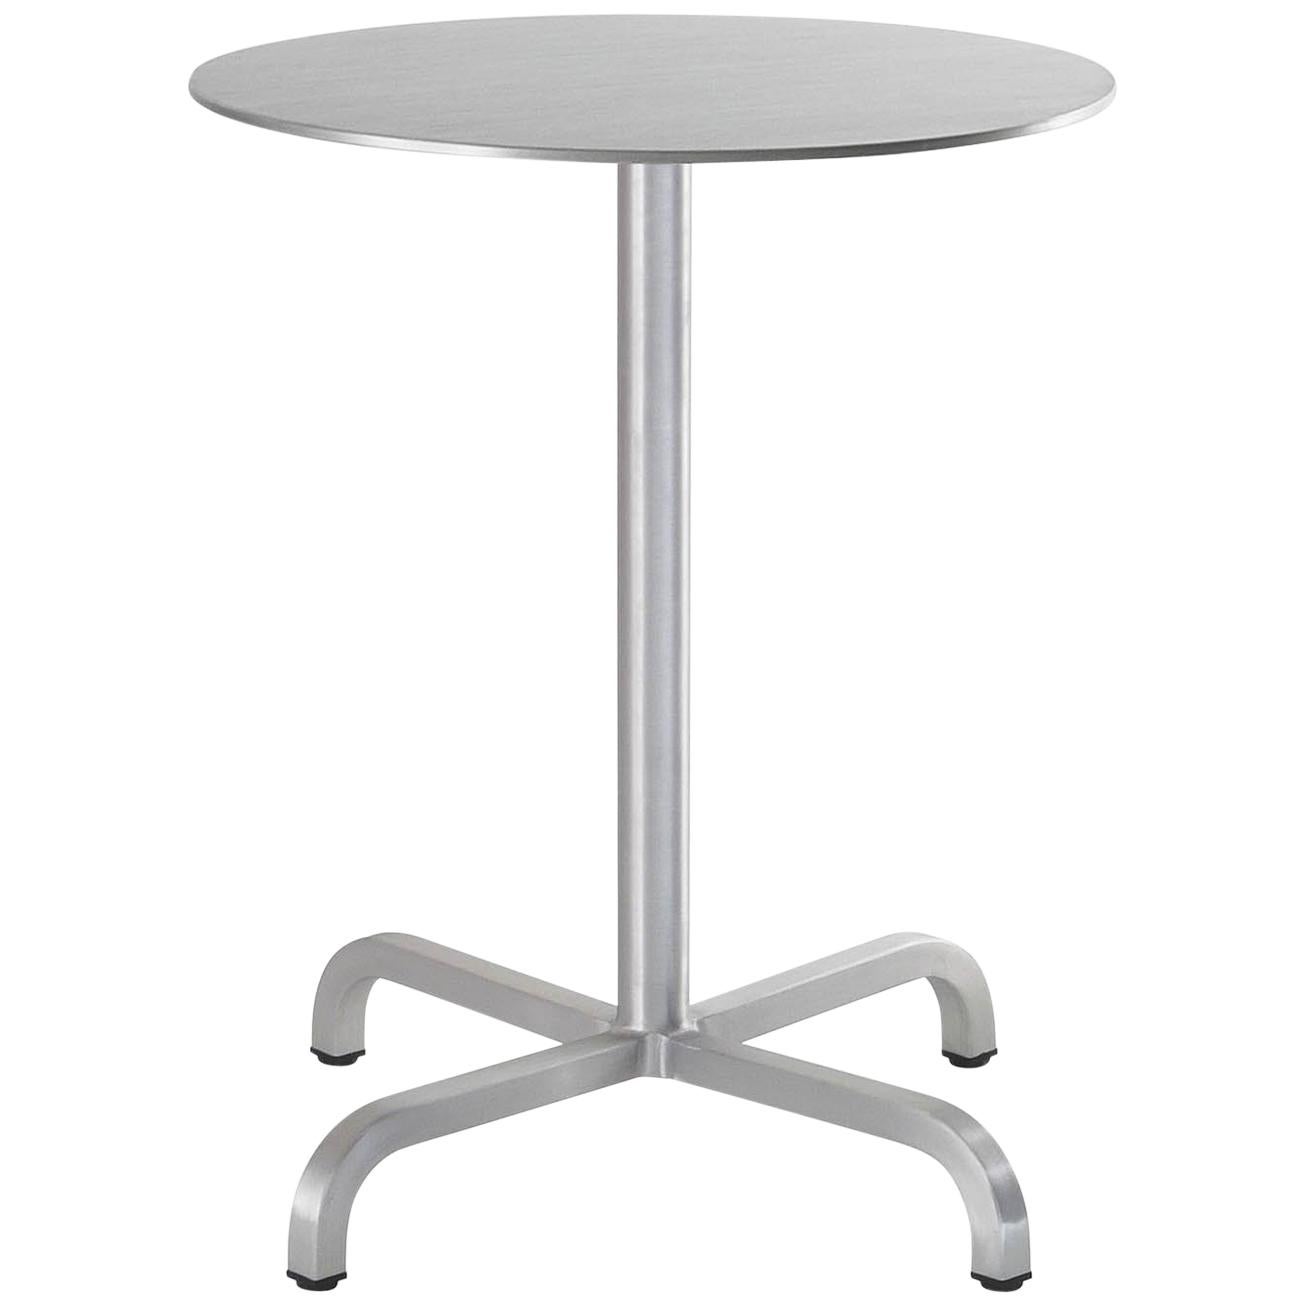 Petite table basse ronde en aluminium brossé Emeco 20-06 de Norman Foster